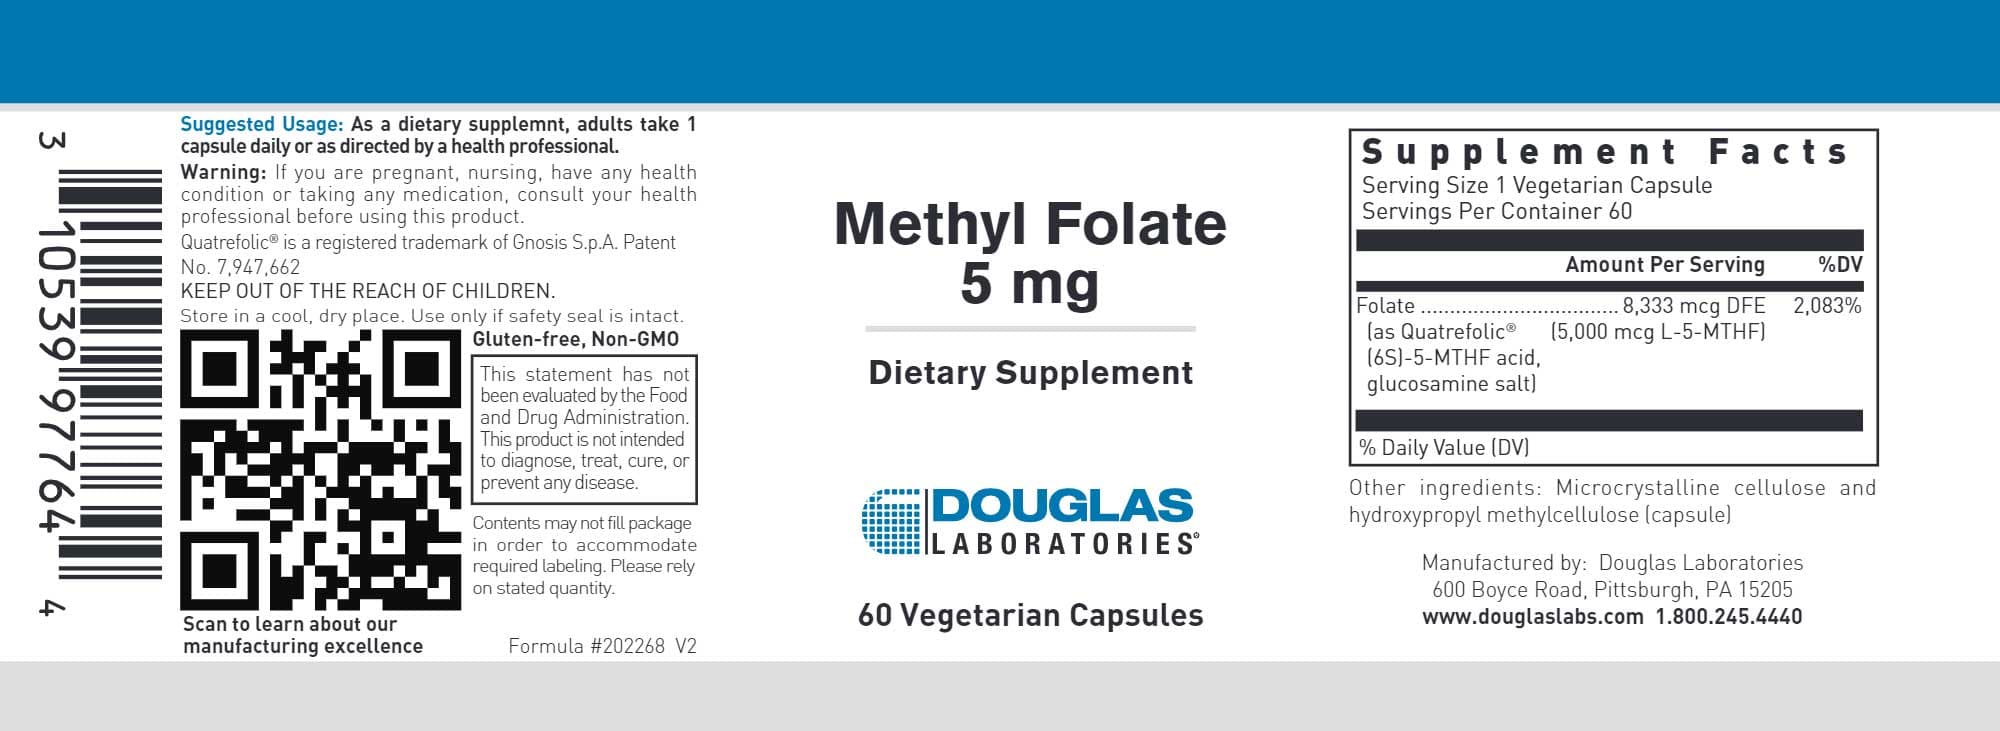 Douglas Laboratories Methyl Folate 5mg label